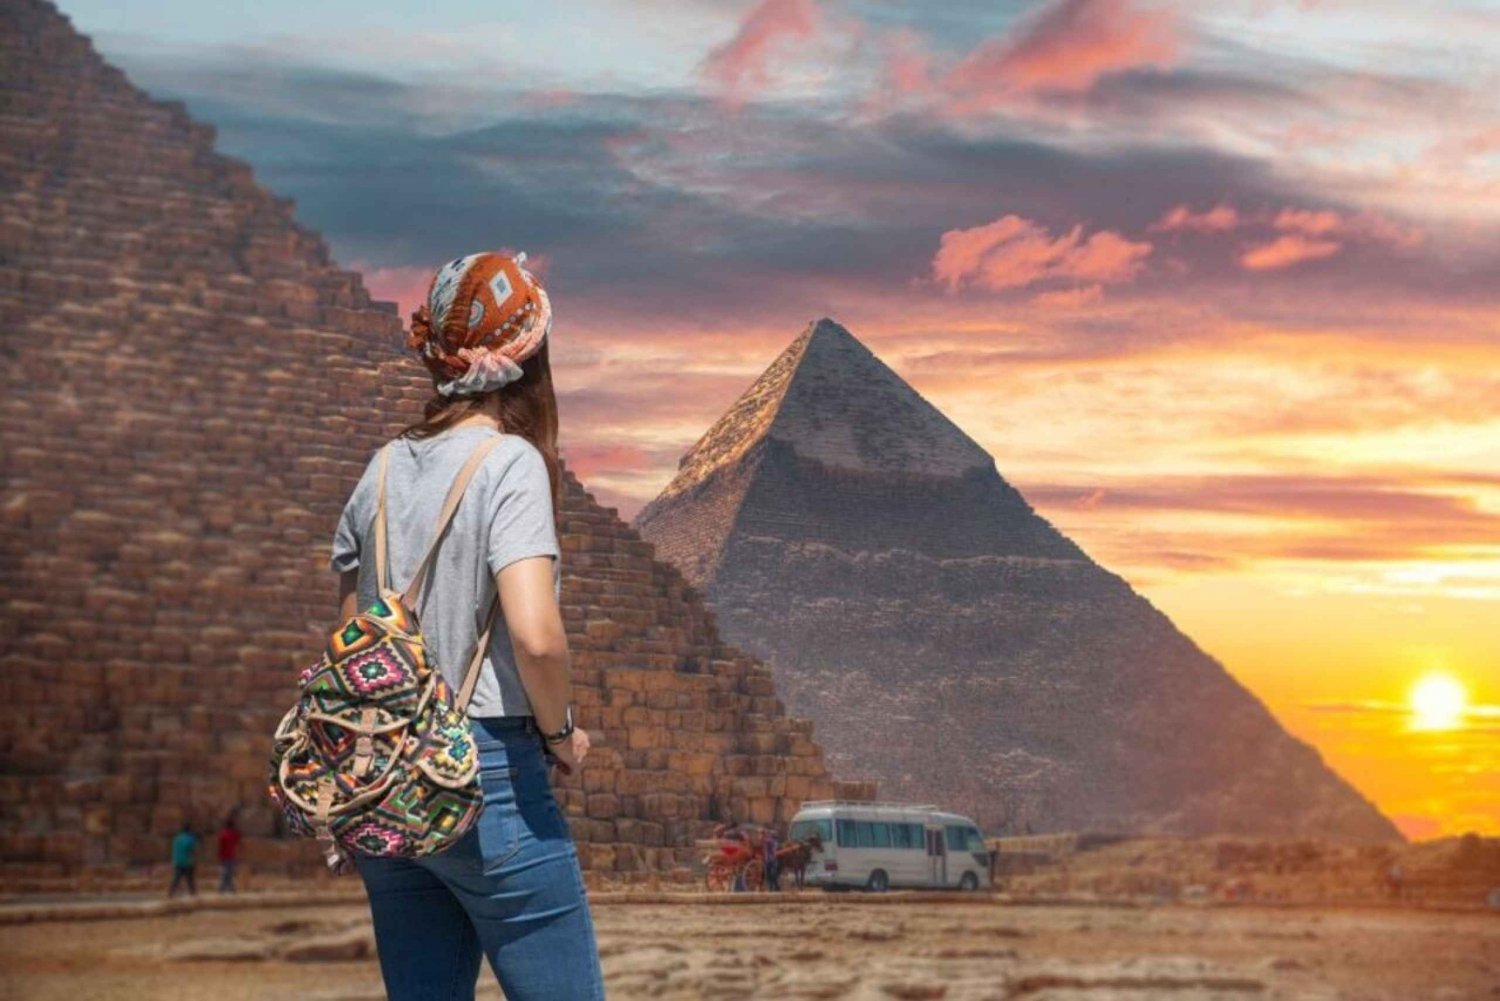 Sahl Hasheesh: Dagsudflugt med frokost til højdepunkterne i Kairo og Giza